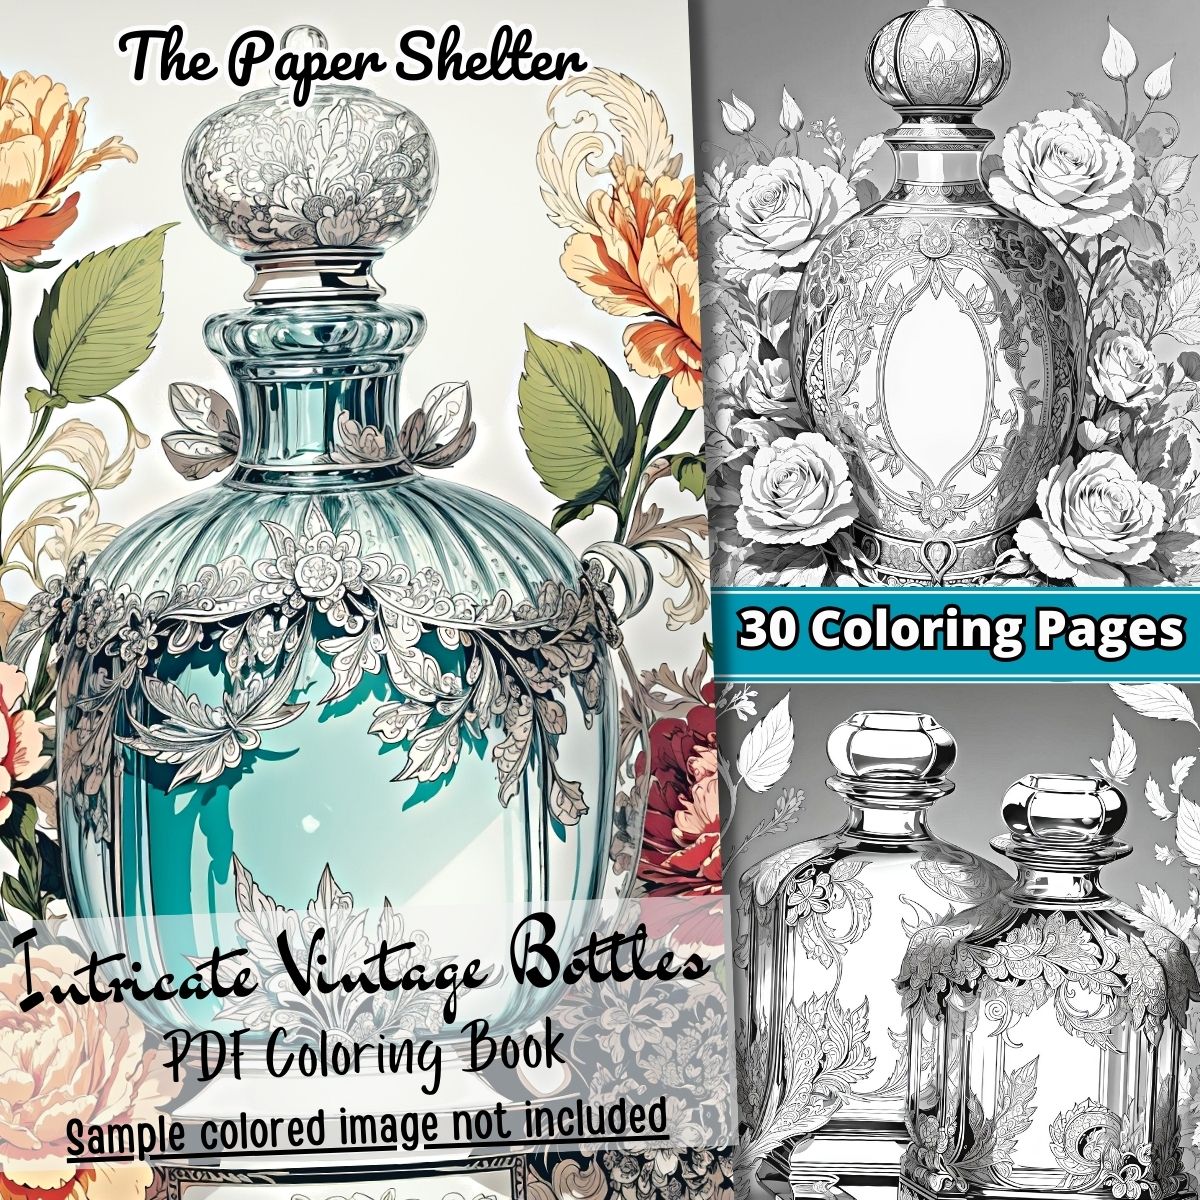 Intricate Vintage Bottles - Digital Coloring Book